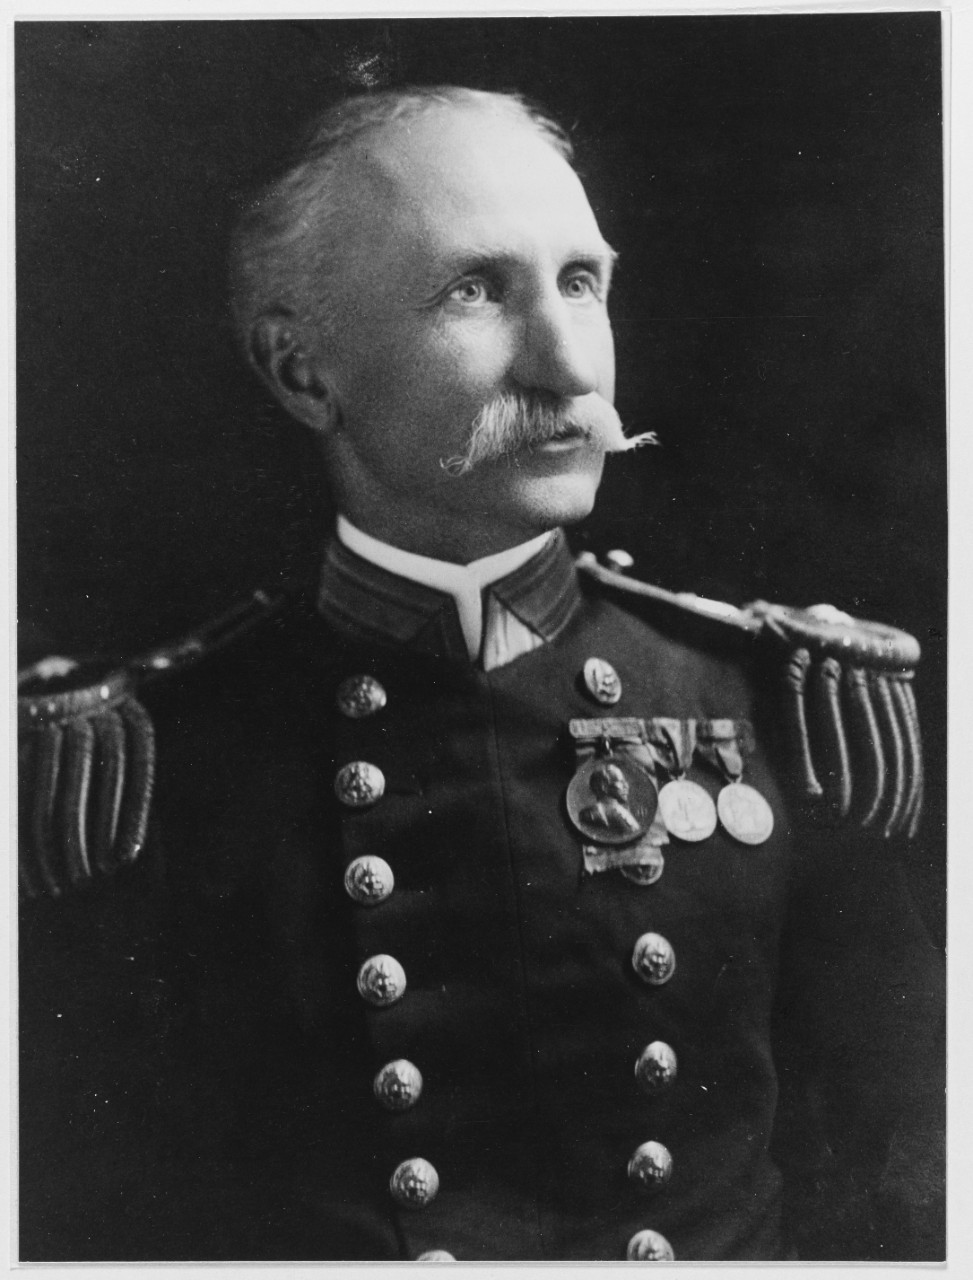 Rear Adm. Bradley Allen Fiske, USN. Portrait photograph taken in October 1912. (Naval History and Heritage Command Photograph 49555)